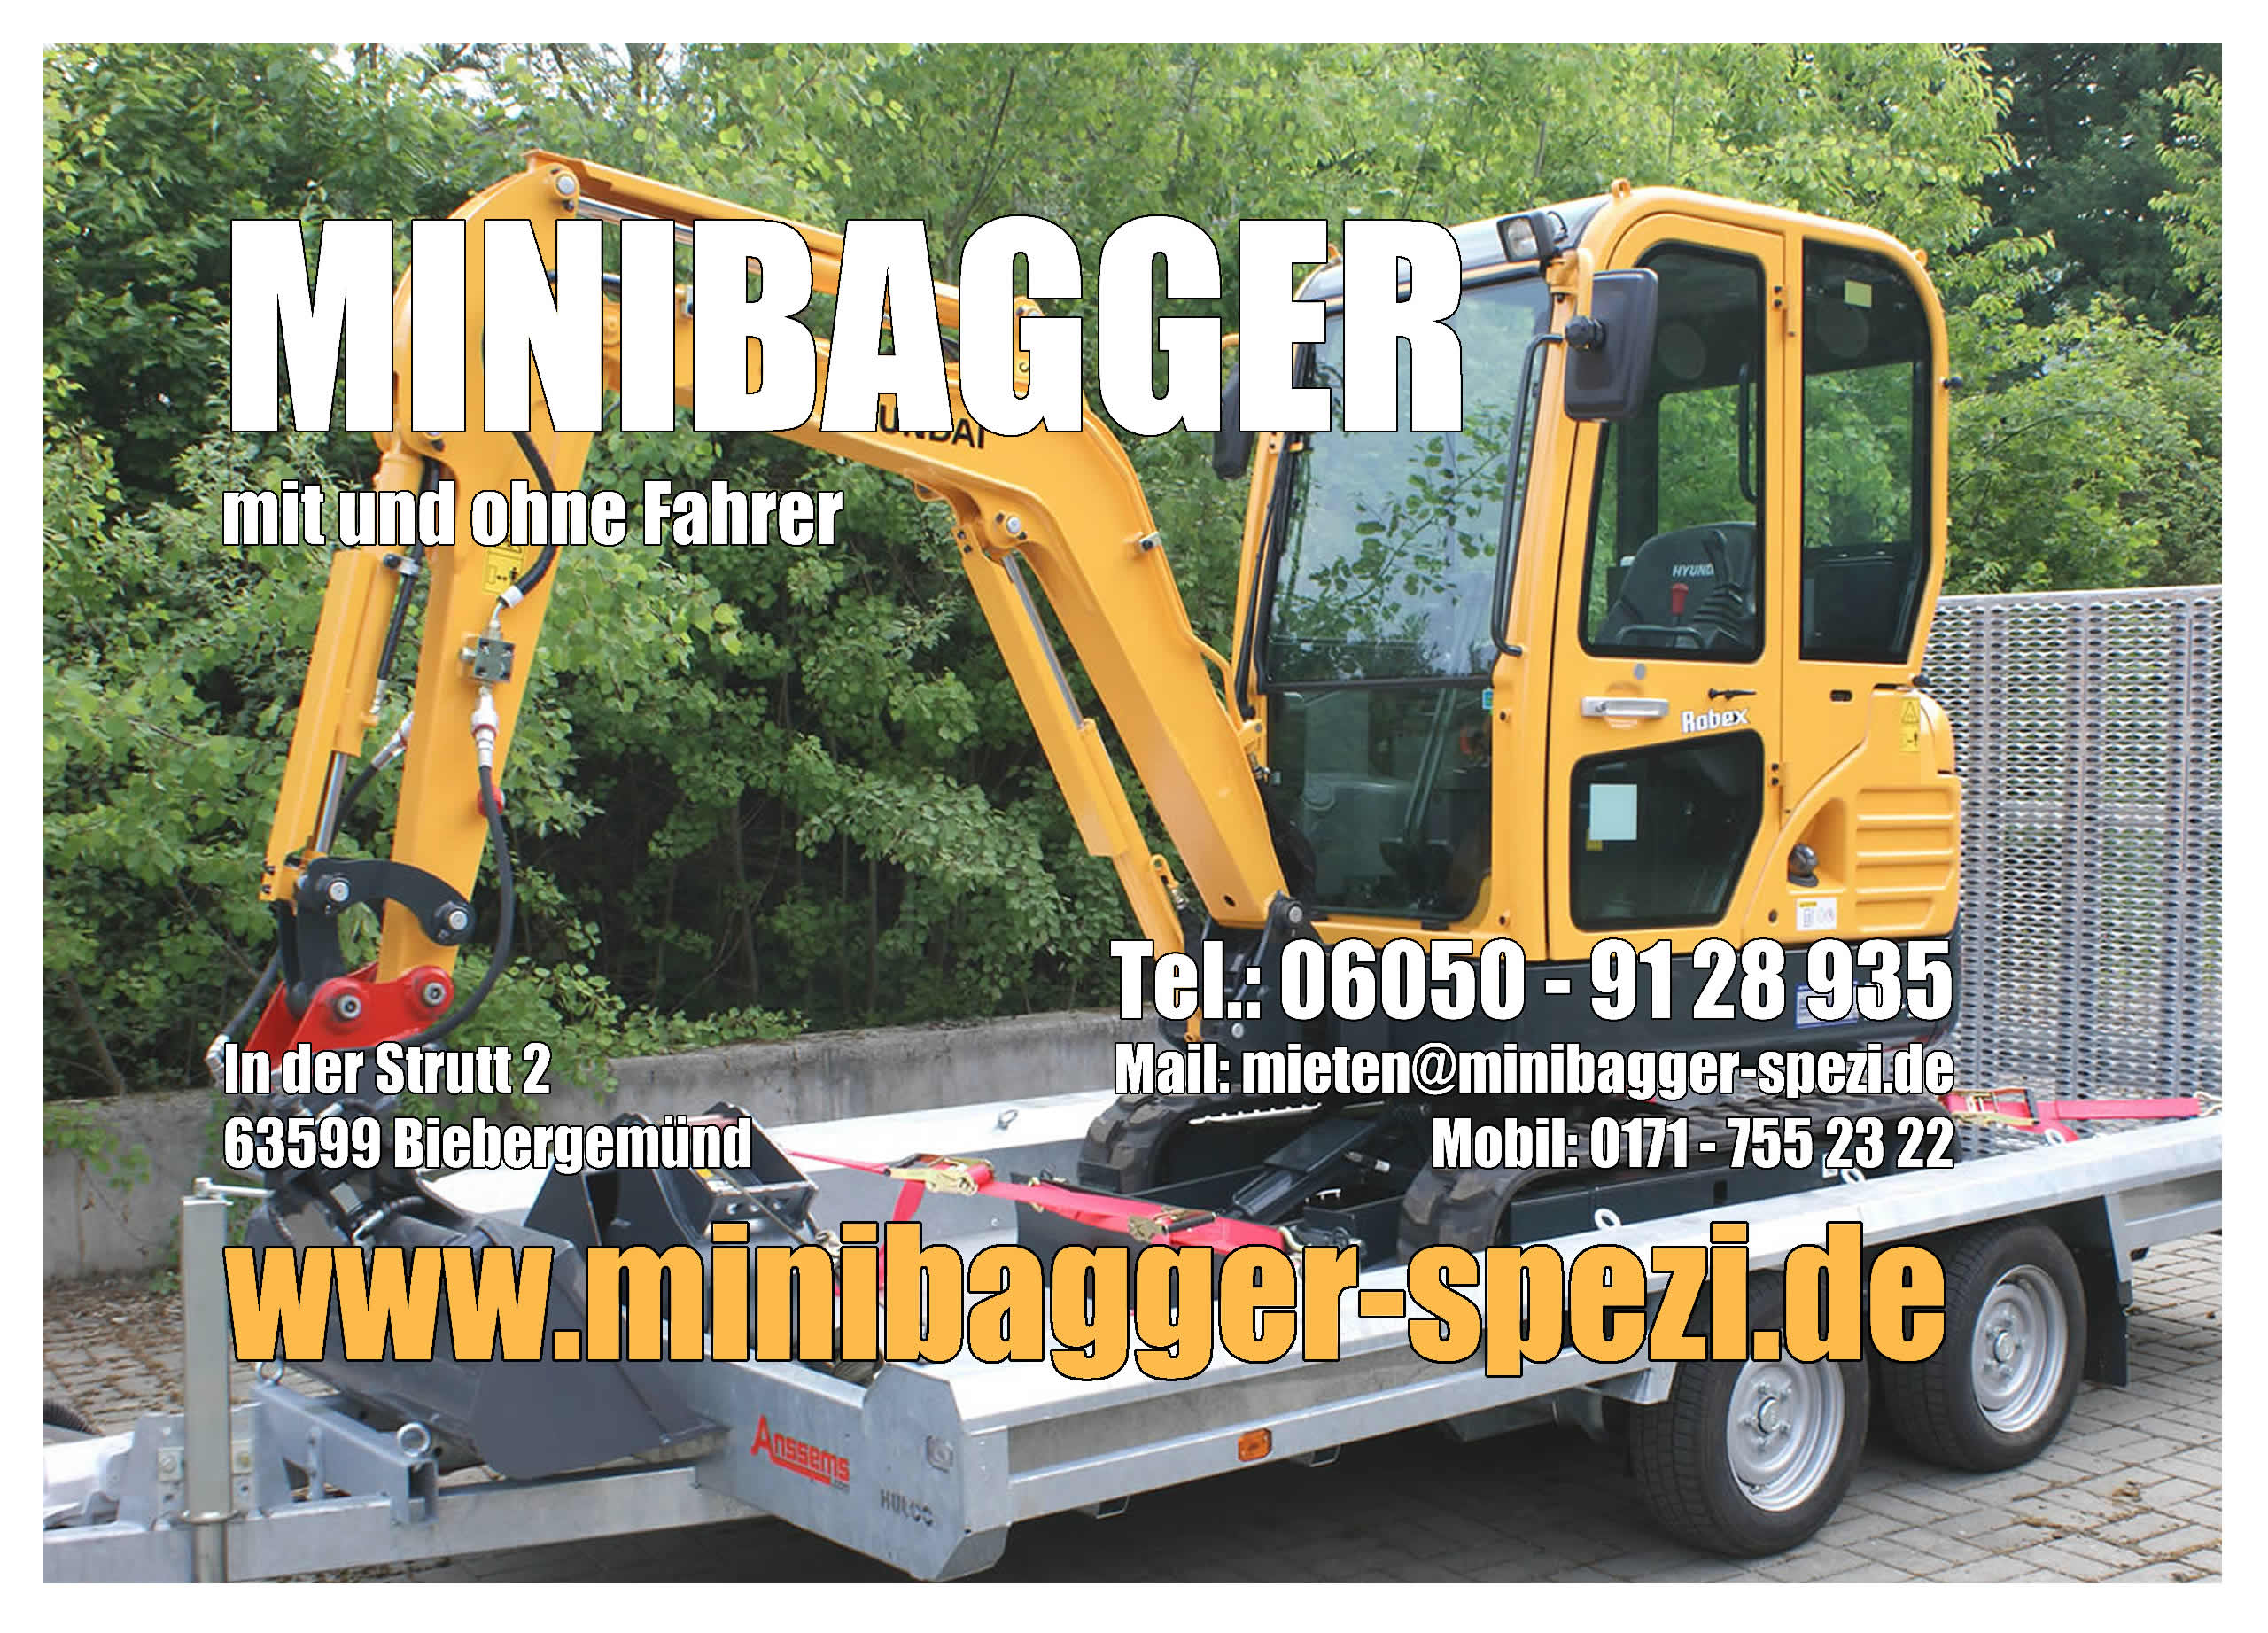 Minibagger-Spezi